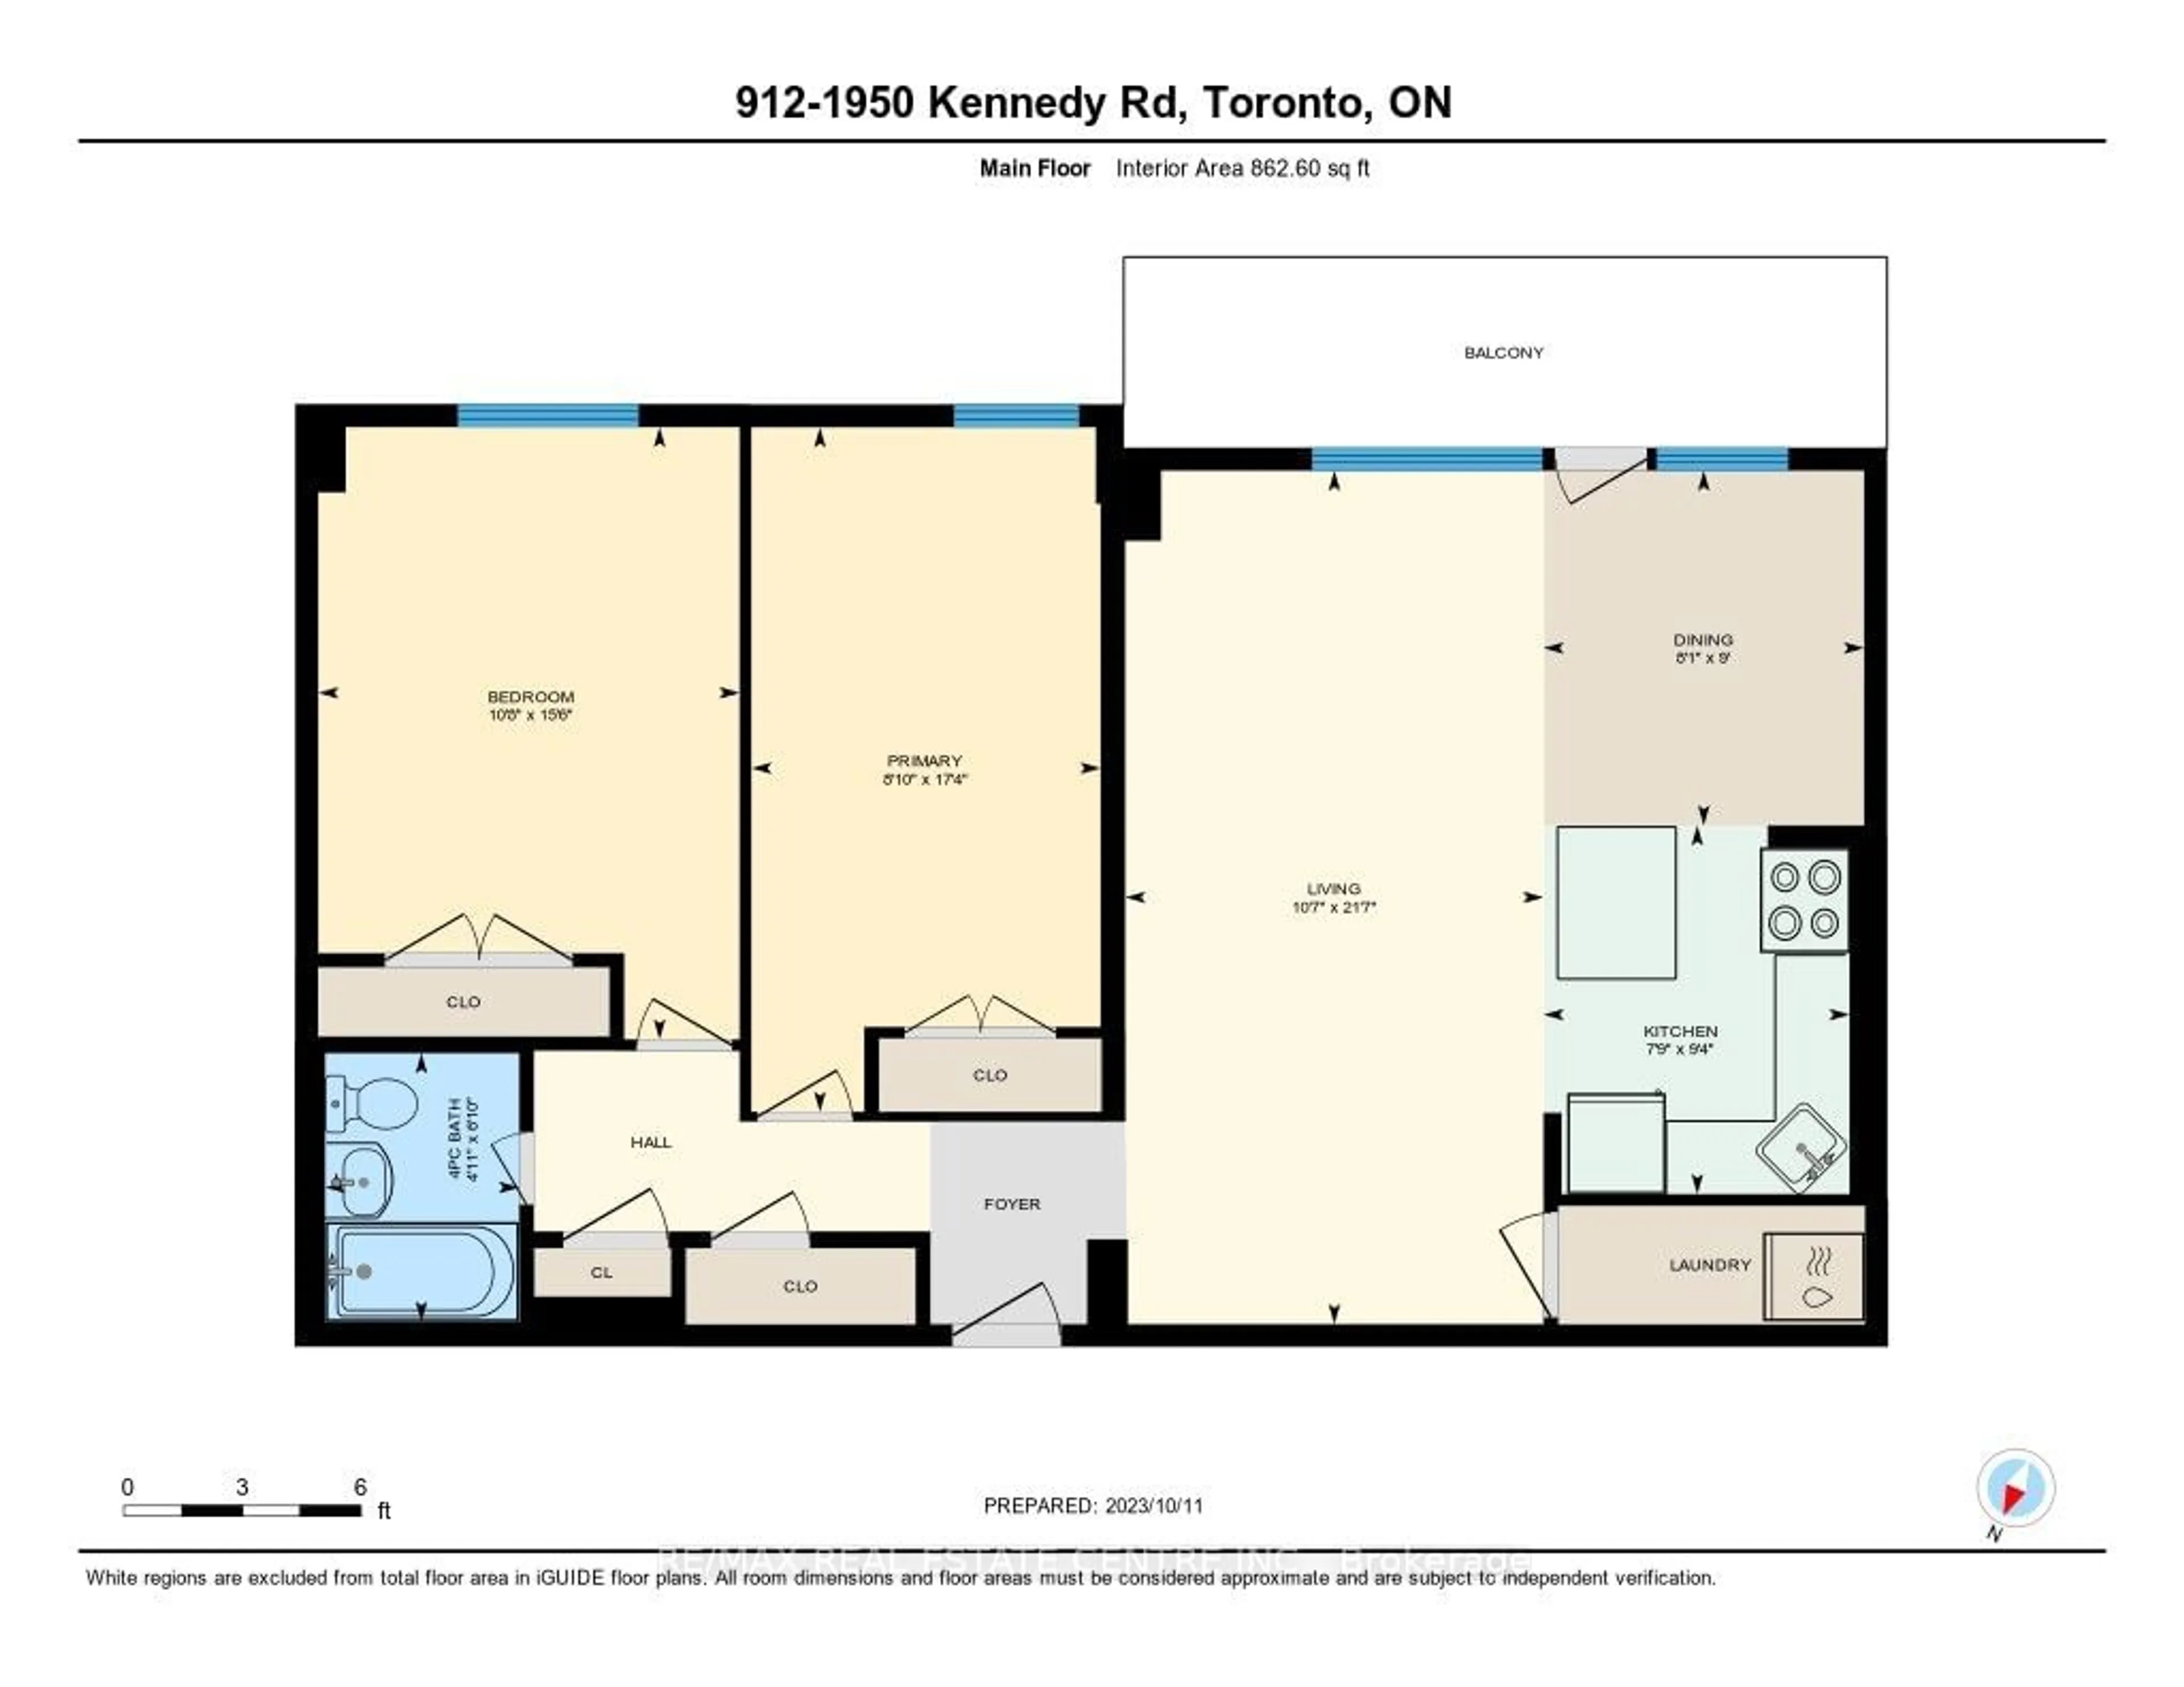 Floor plan for 1950 Kennedy Rd #912, Toronto Ontario M1P 4S9